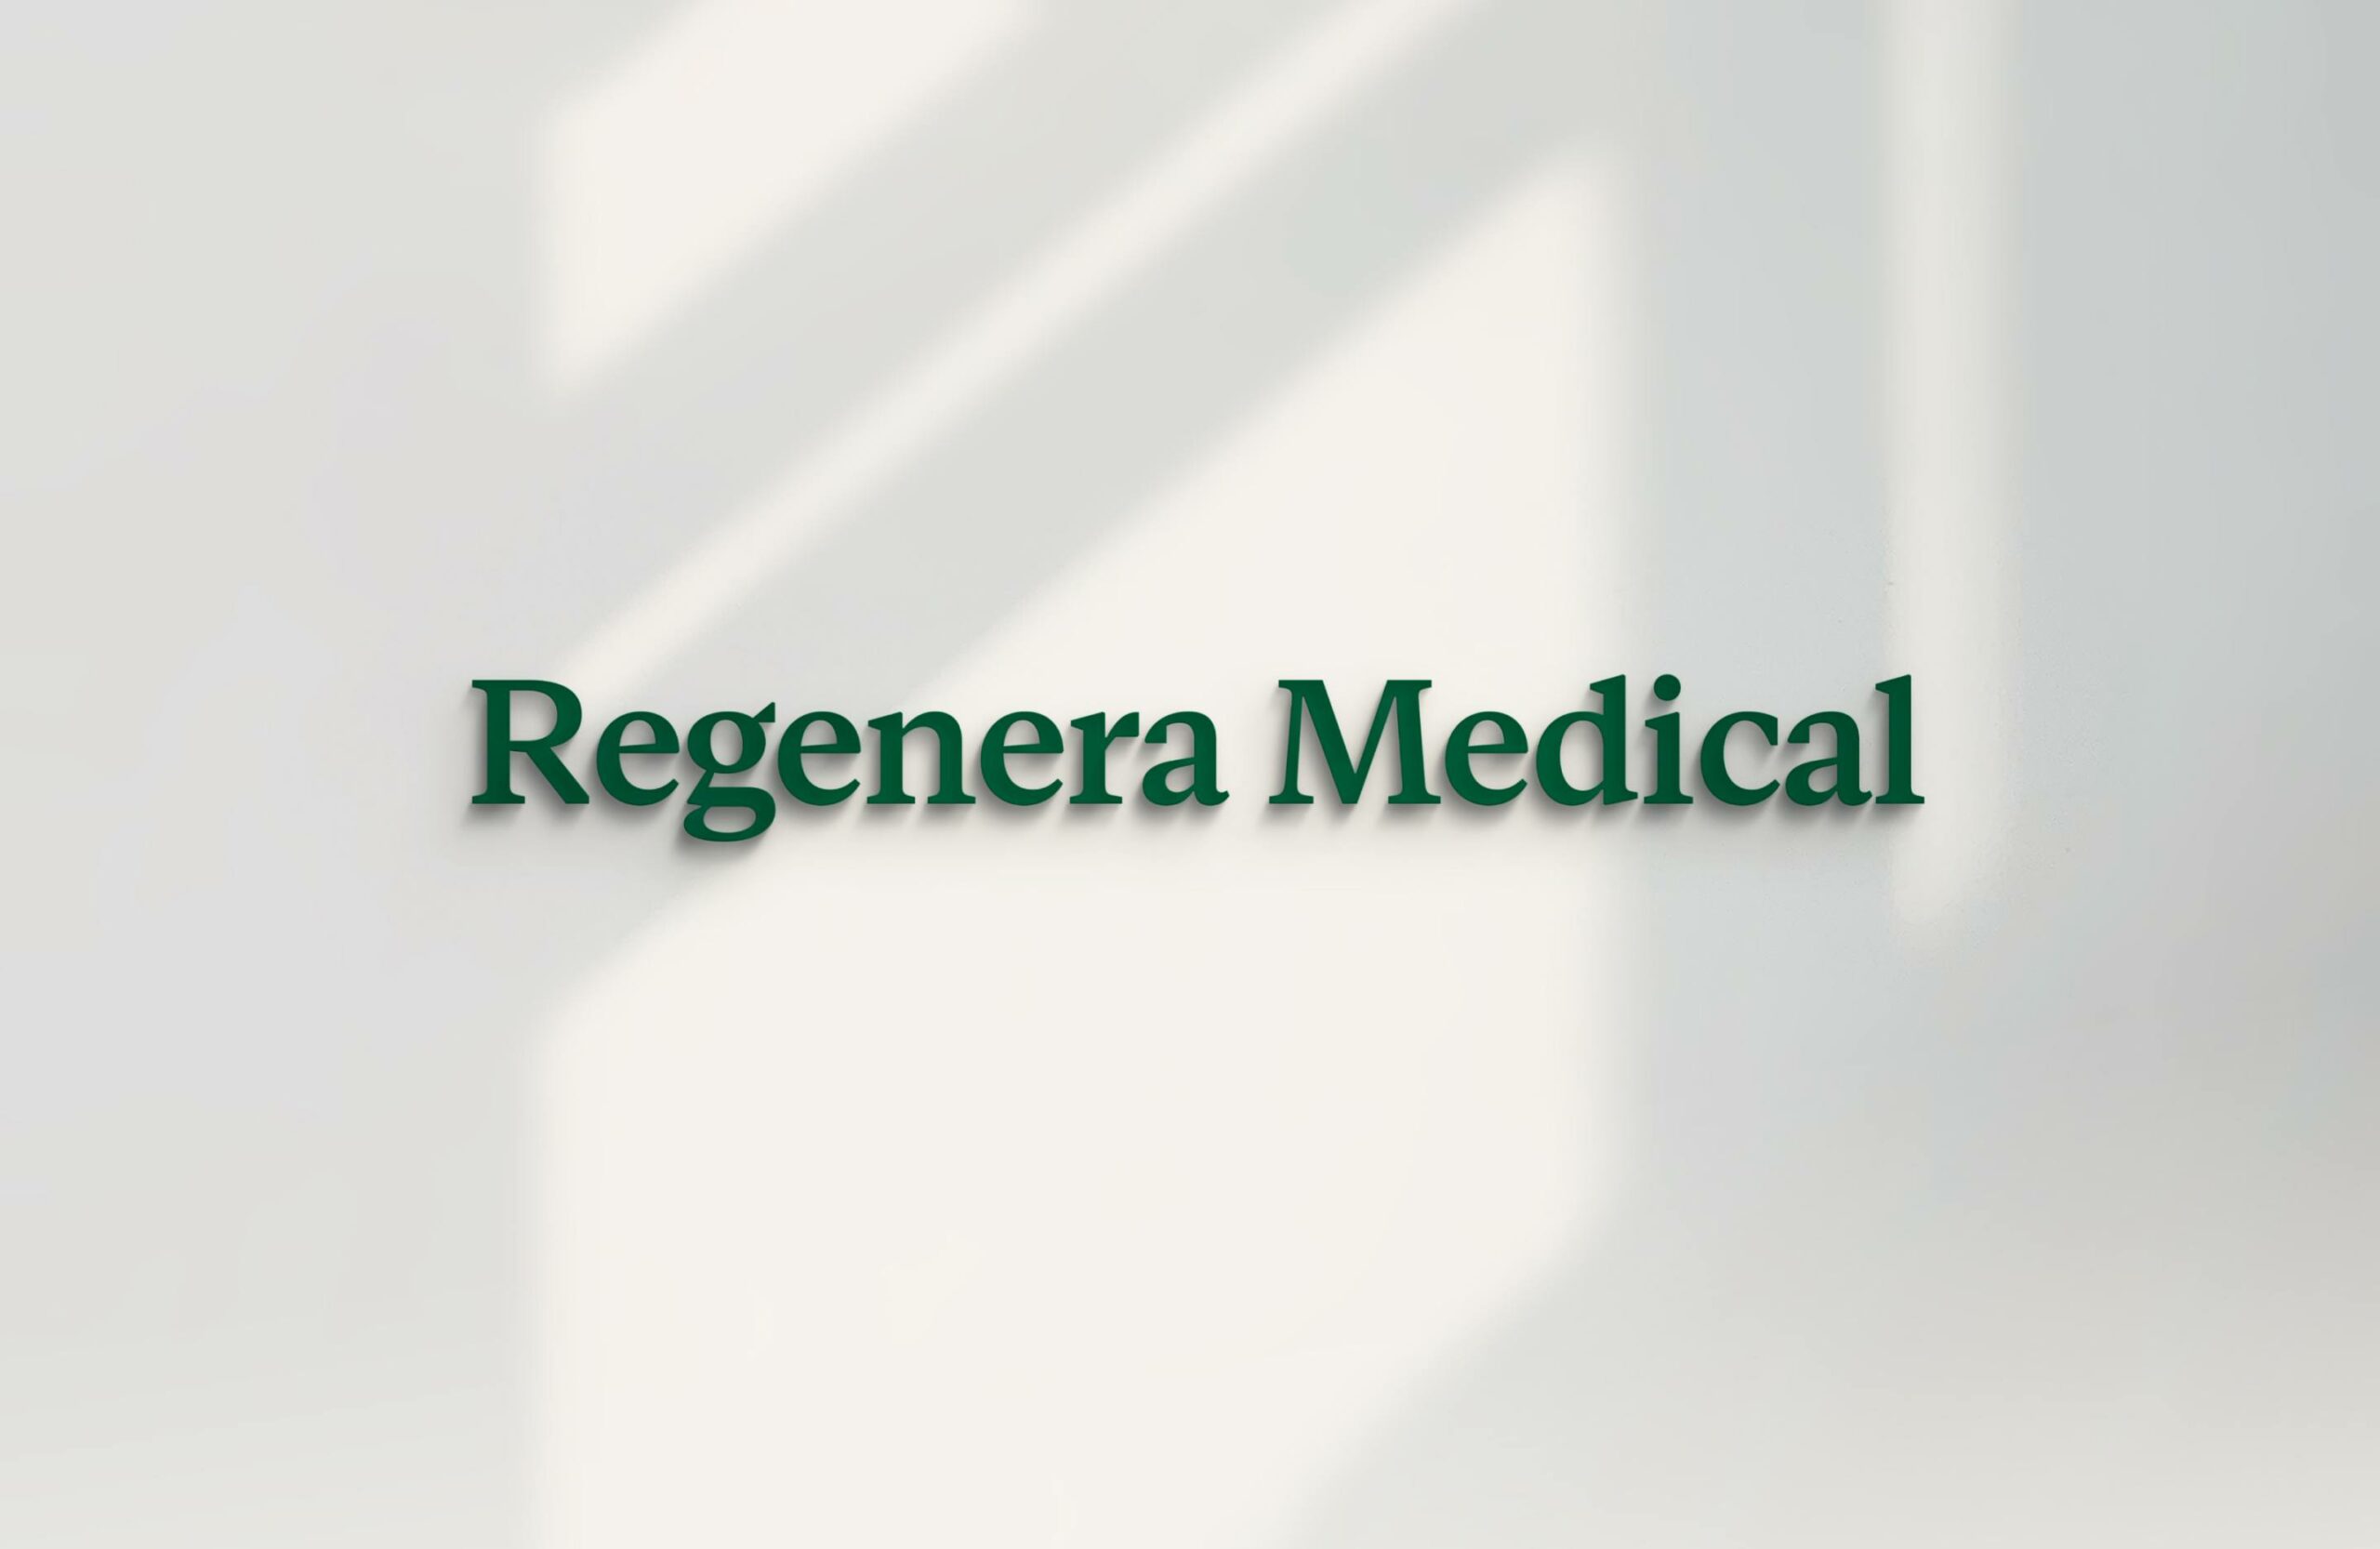 Regenera Medical